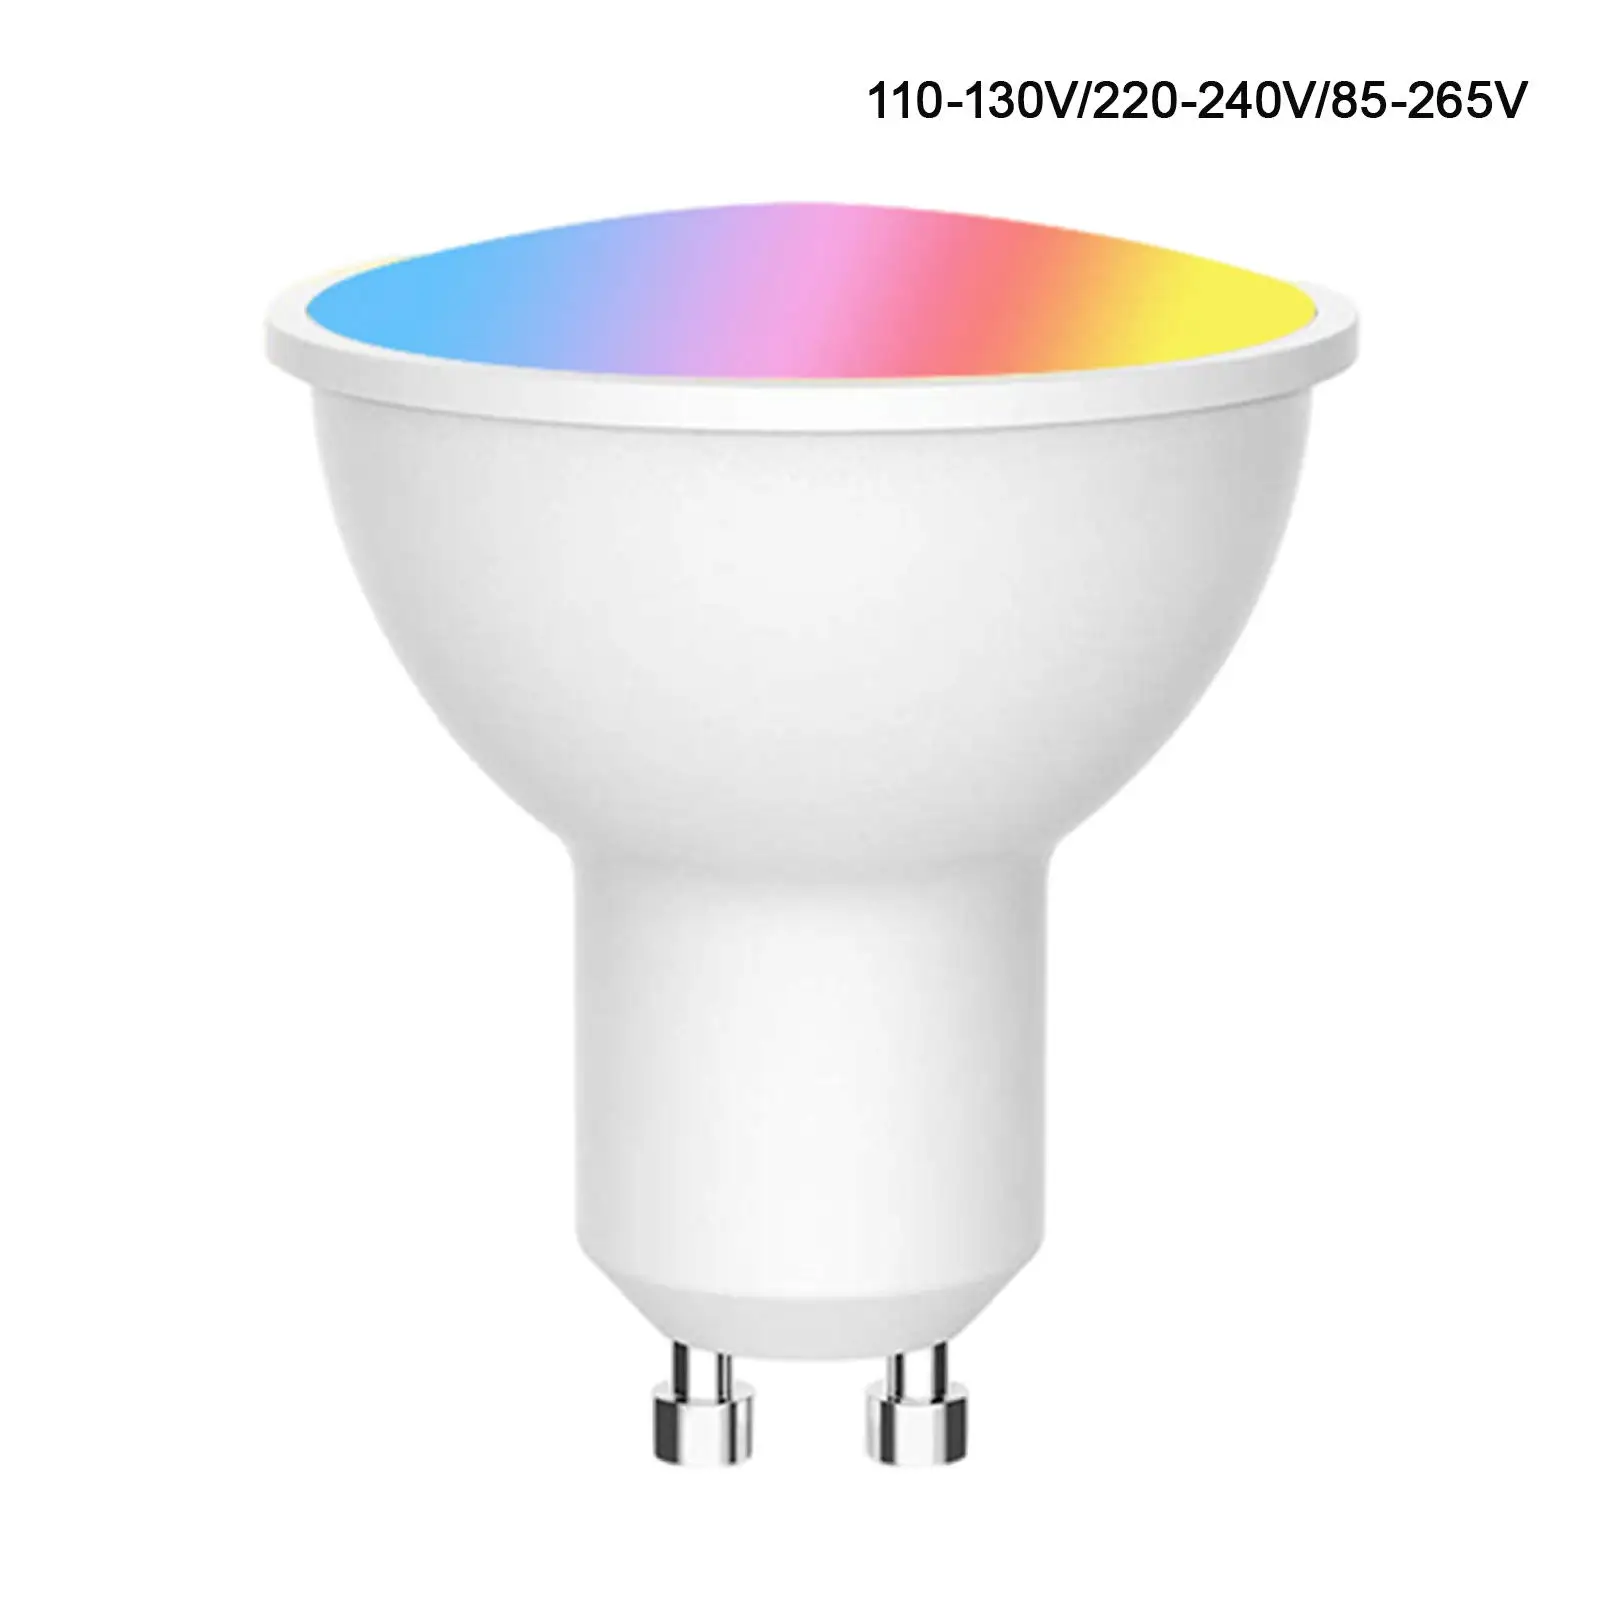 

Rgbcw Color Changing Bulb GU10 32W Equivalent Flood Light Bulb 16 Million Color Voice Control 8 Scene Model for Alexa Stage Bar